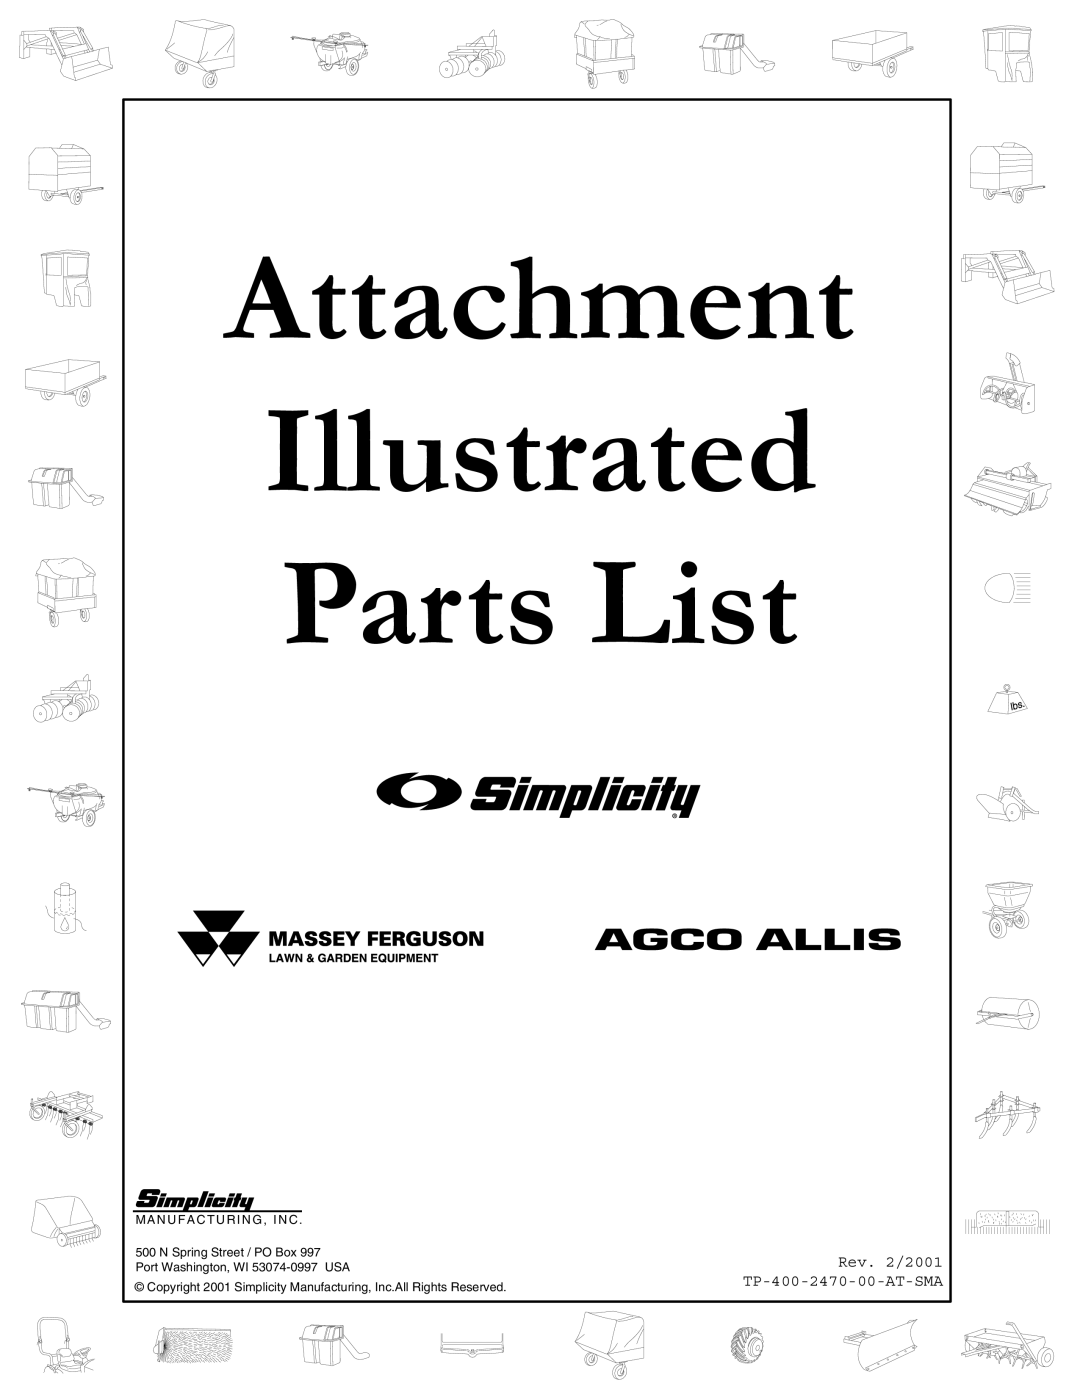 Snapper manual Attachment Illustrated Parts List, Rev. 2/2001 TP-400-2470-00-AT-SMA, Port Washington, WI 53074-0997 USA 